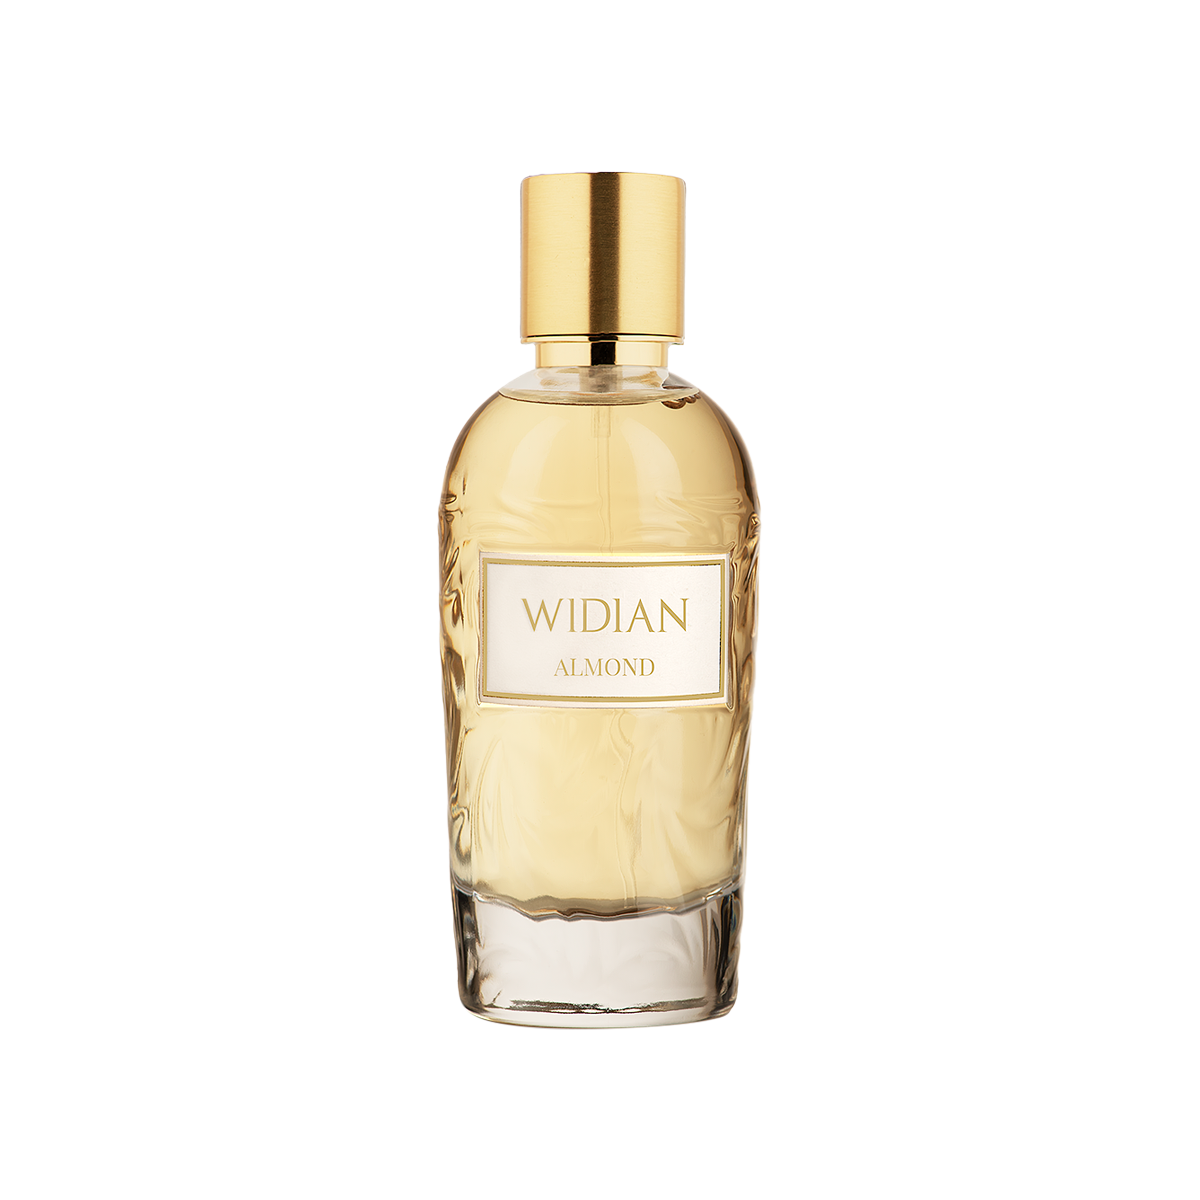 Widian - Almond Rose Eau de Parfum